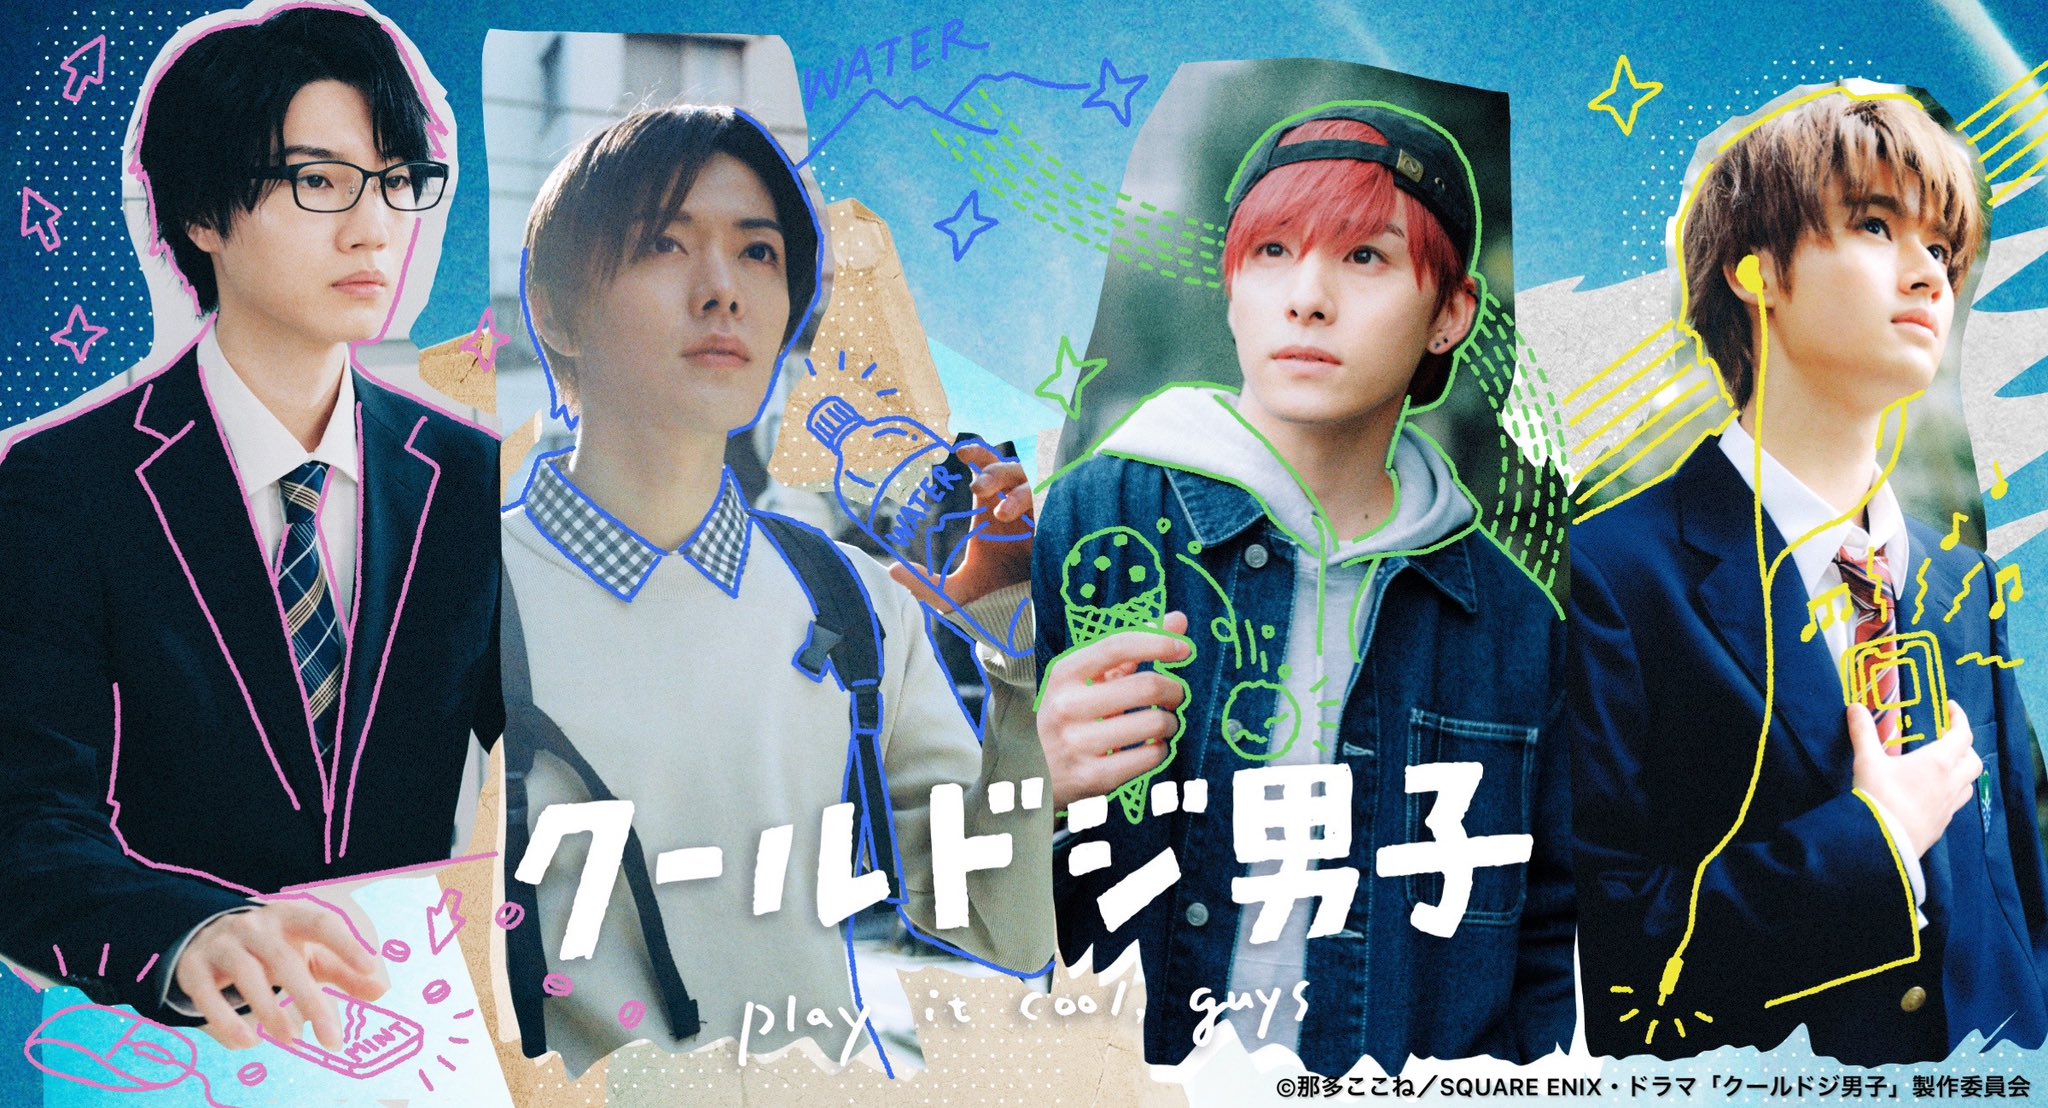 K Popj Drama ยูตะ Nct จะรับบทนำในซีรีส์ Play It Cool Guys ทางสถานีโทรทัศน์ Tv Tokyo ของ 7169